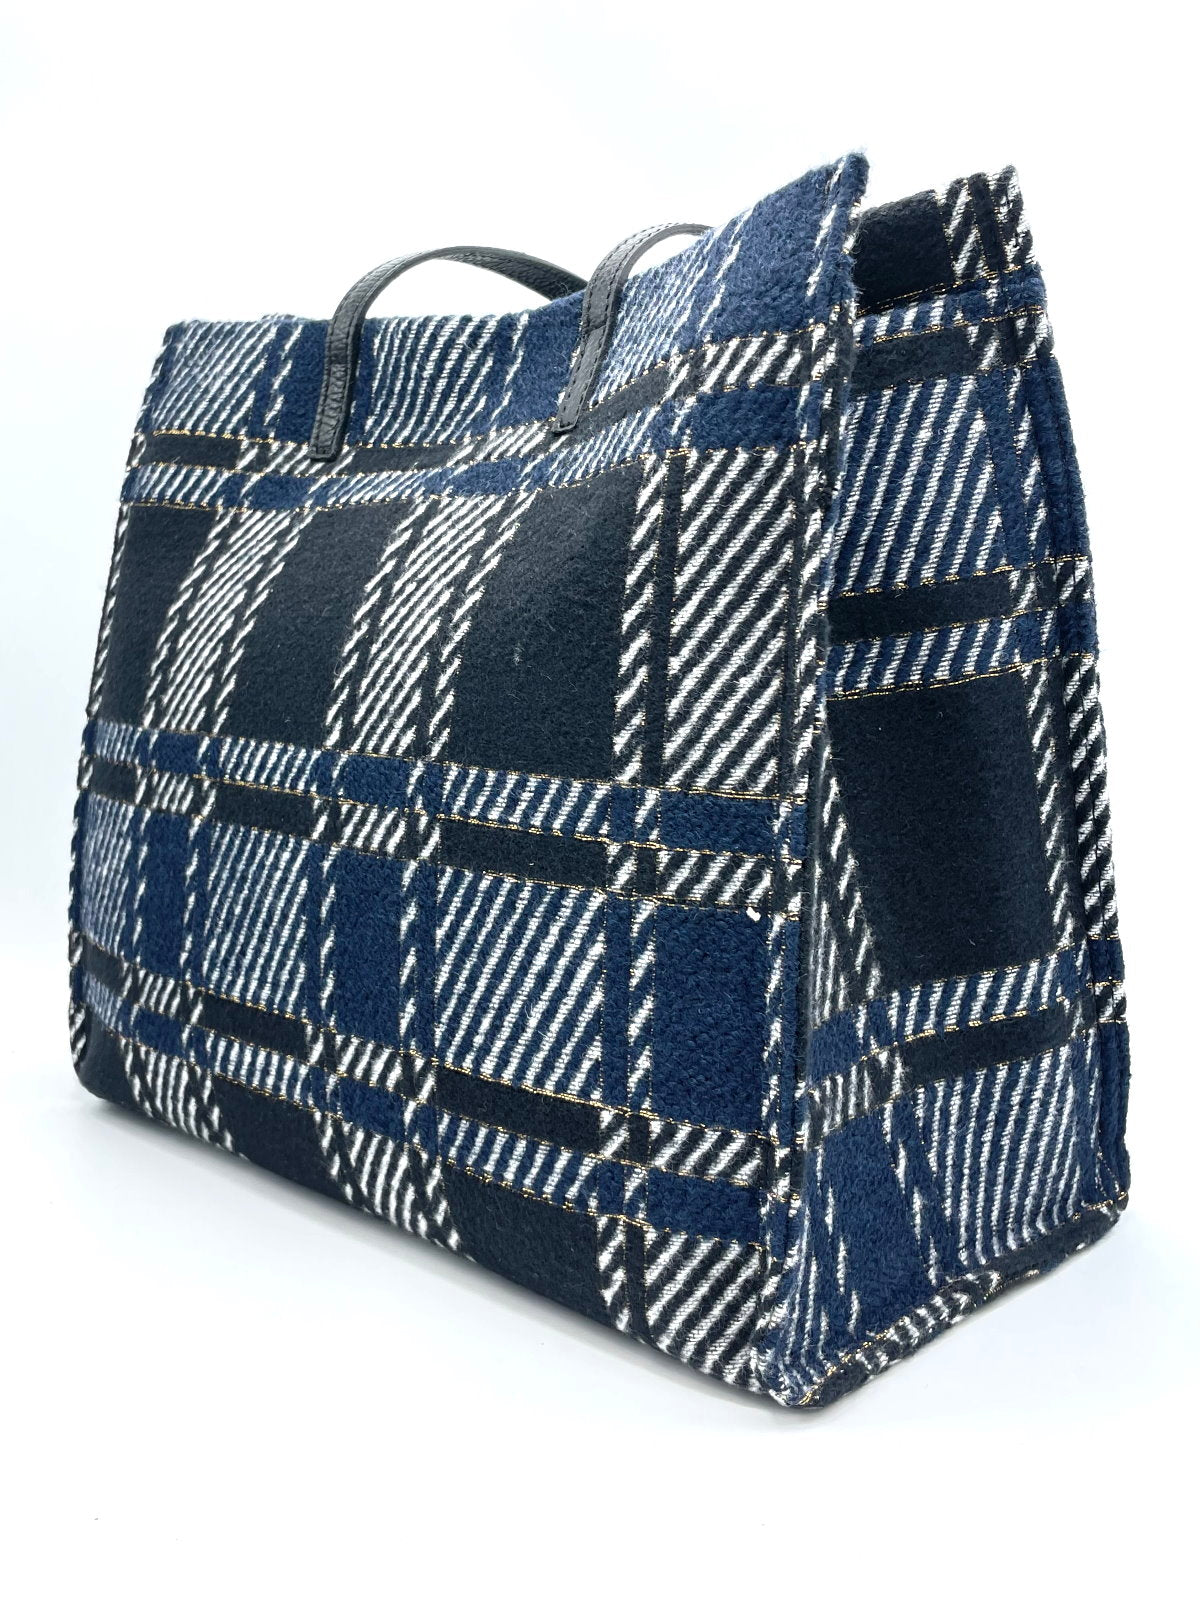 Printed textile handbag for women art. 112345.412-3